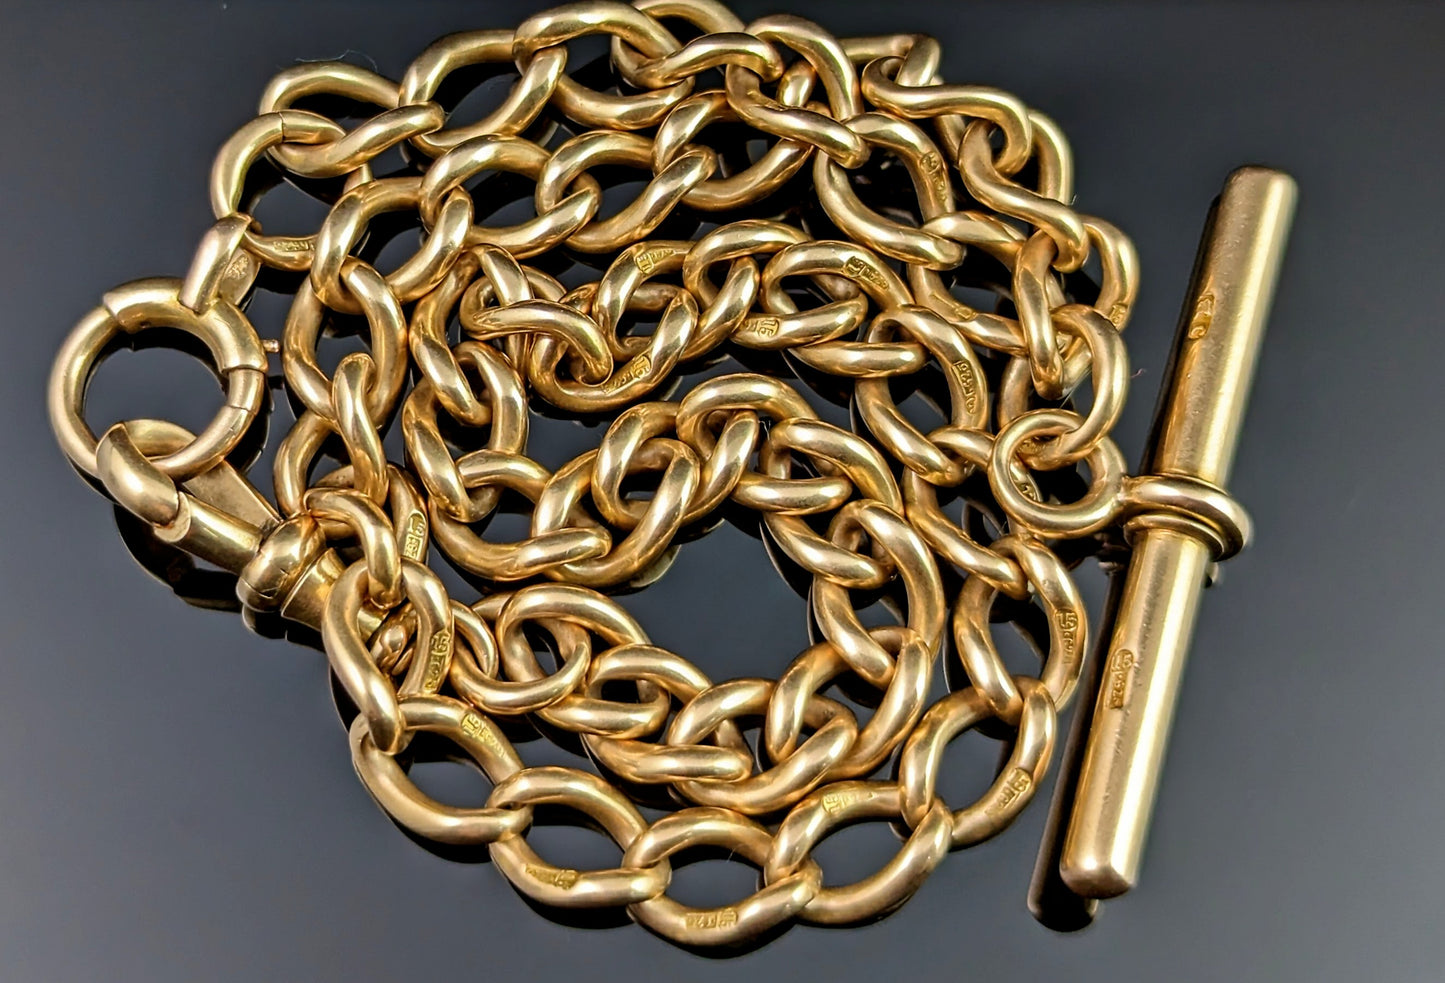 Antique 15ct gold Albert chain, watch chain necklace, heavy